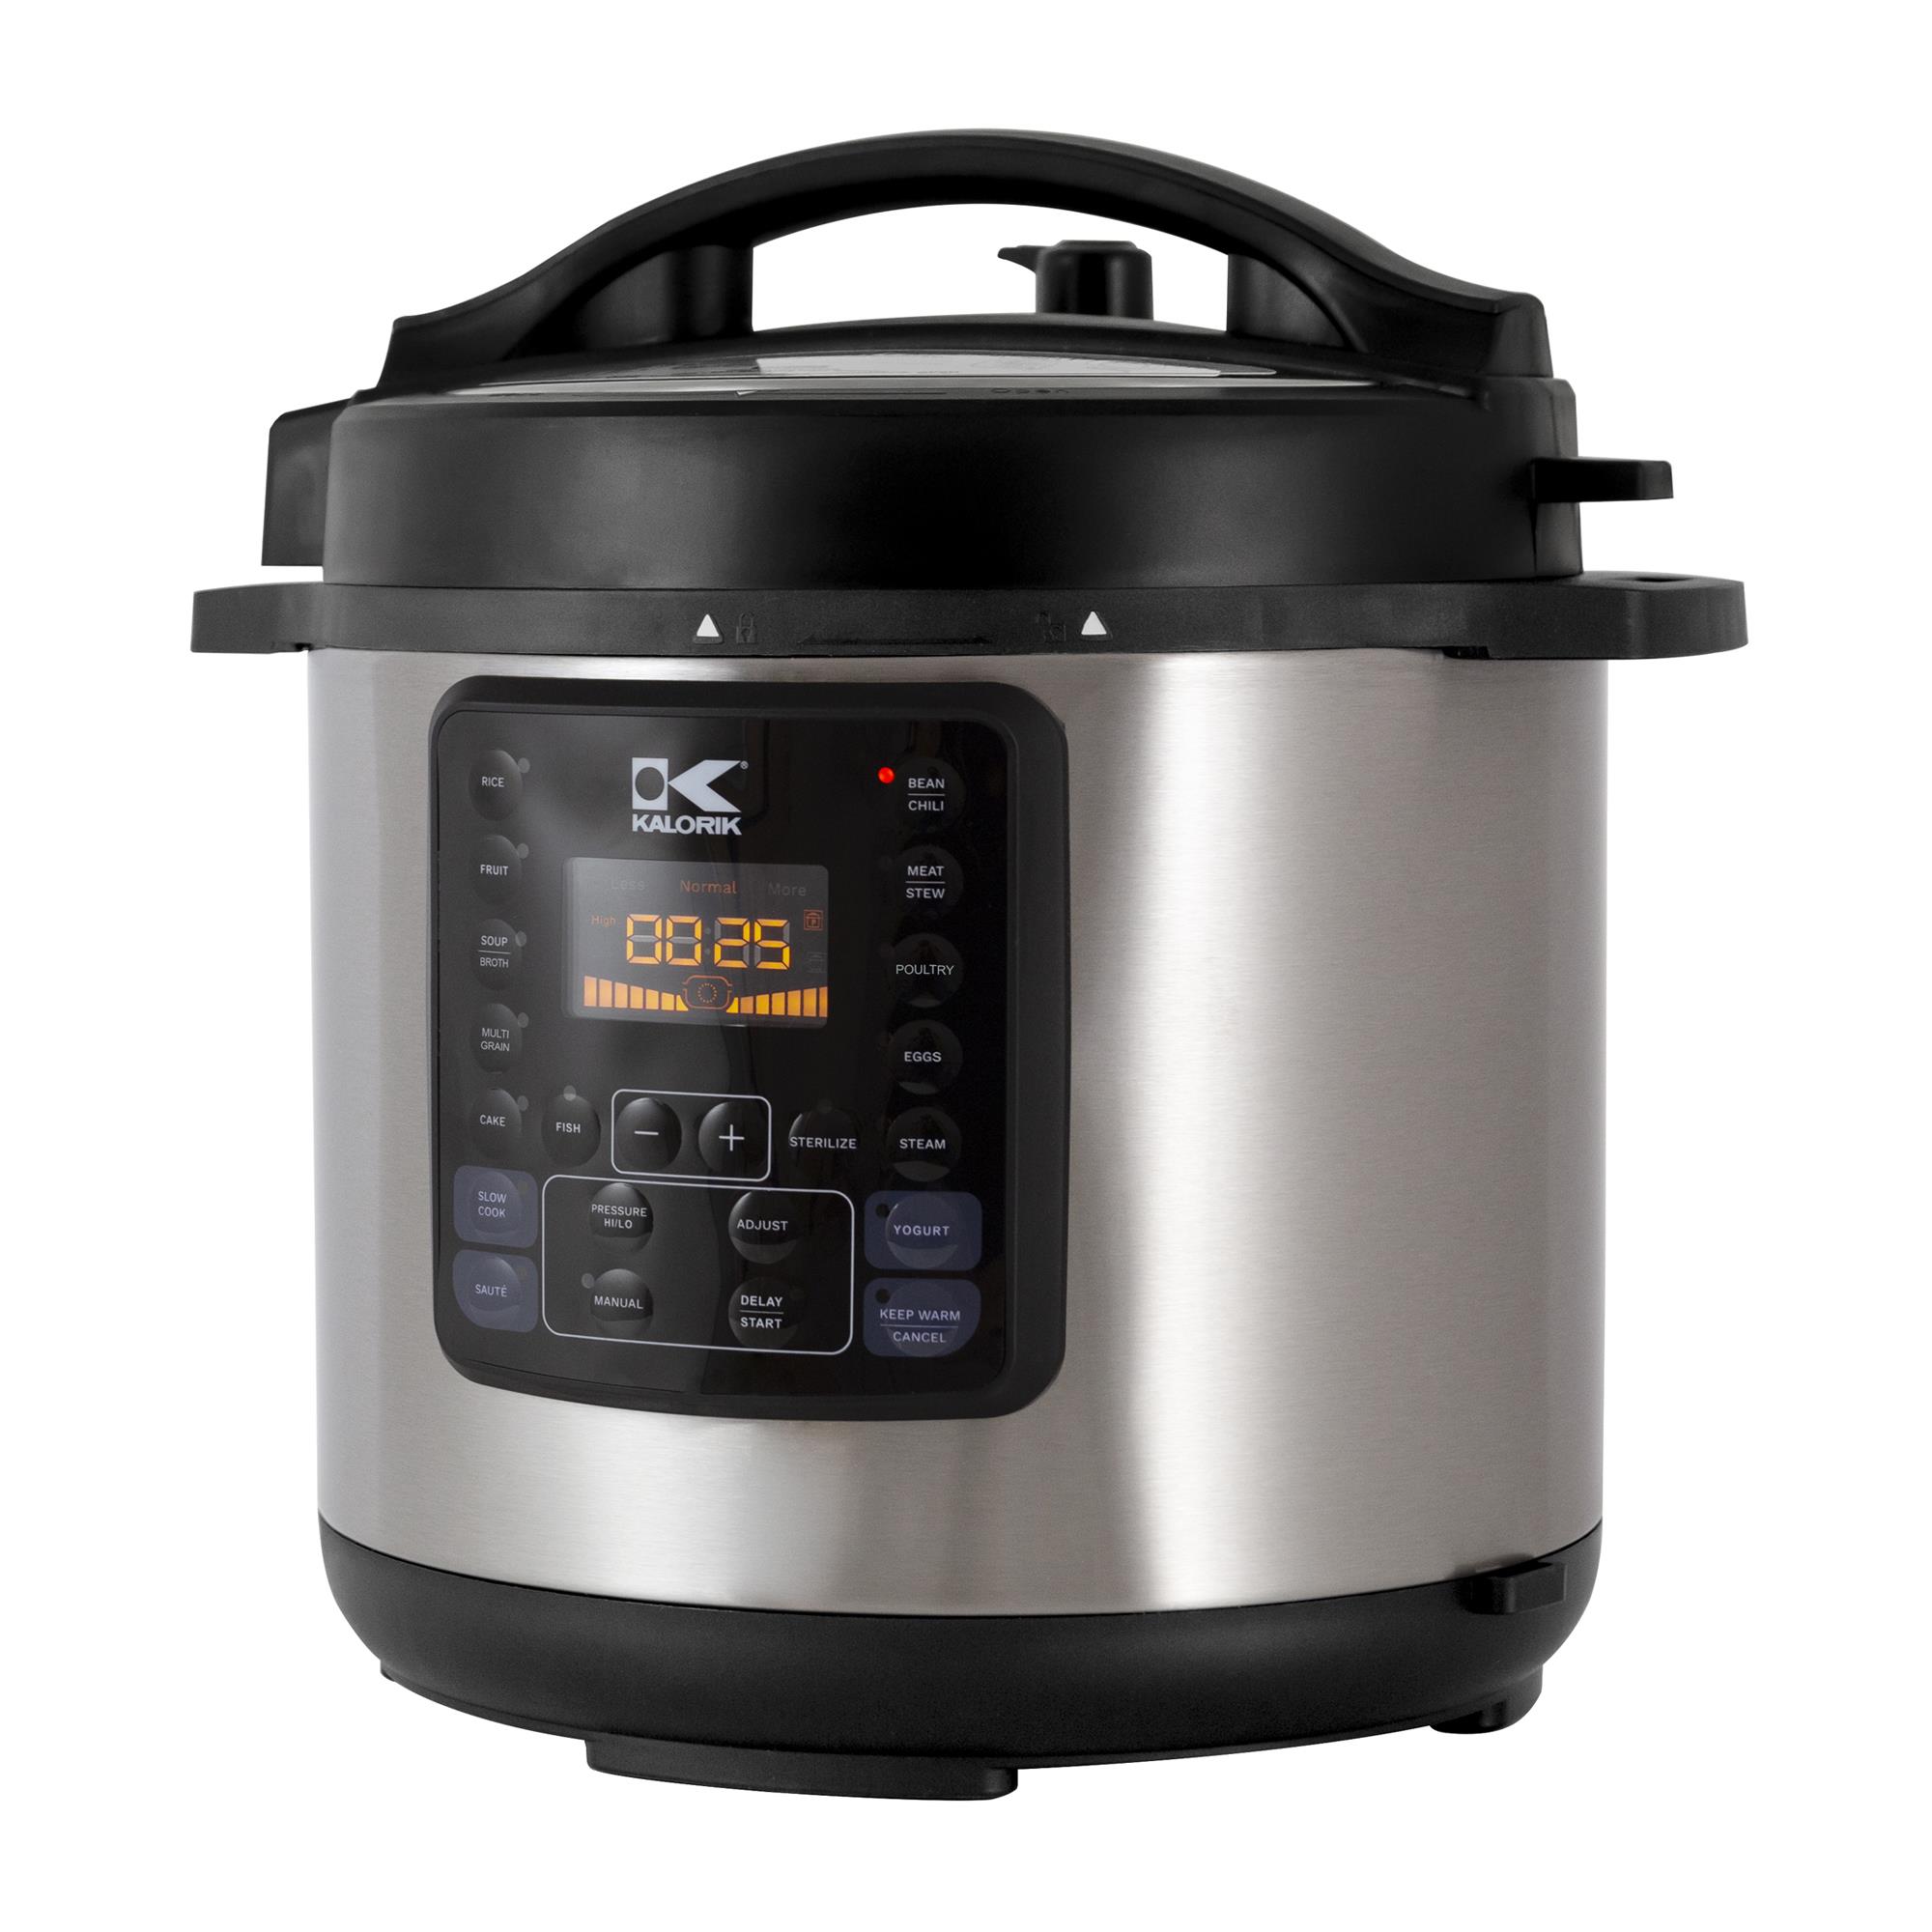 Kalorik 6QT 10-in-1 Multi Use Pressure Cooker